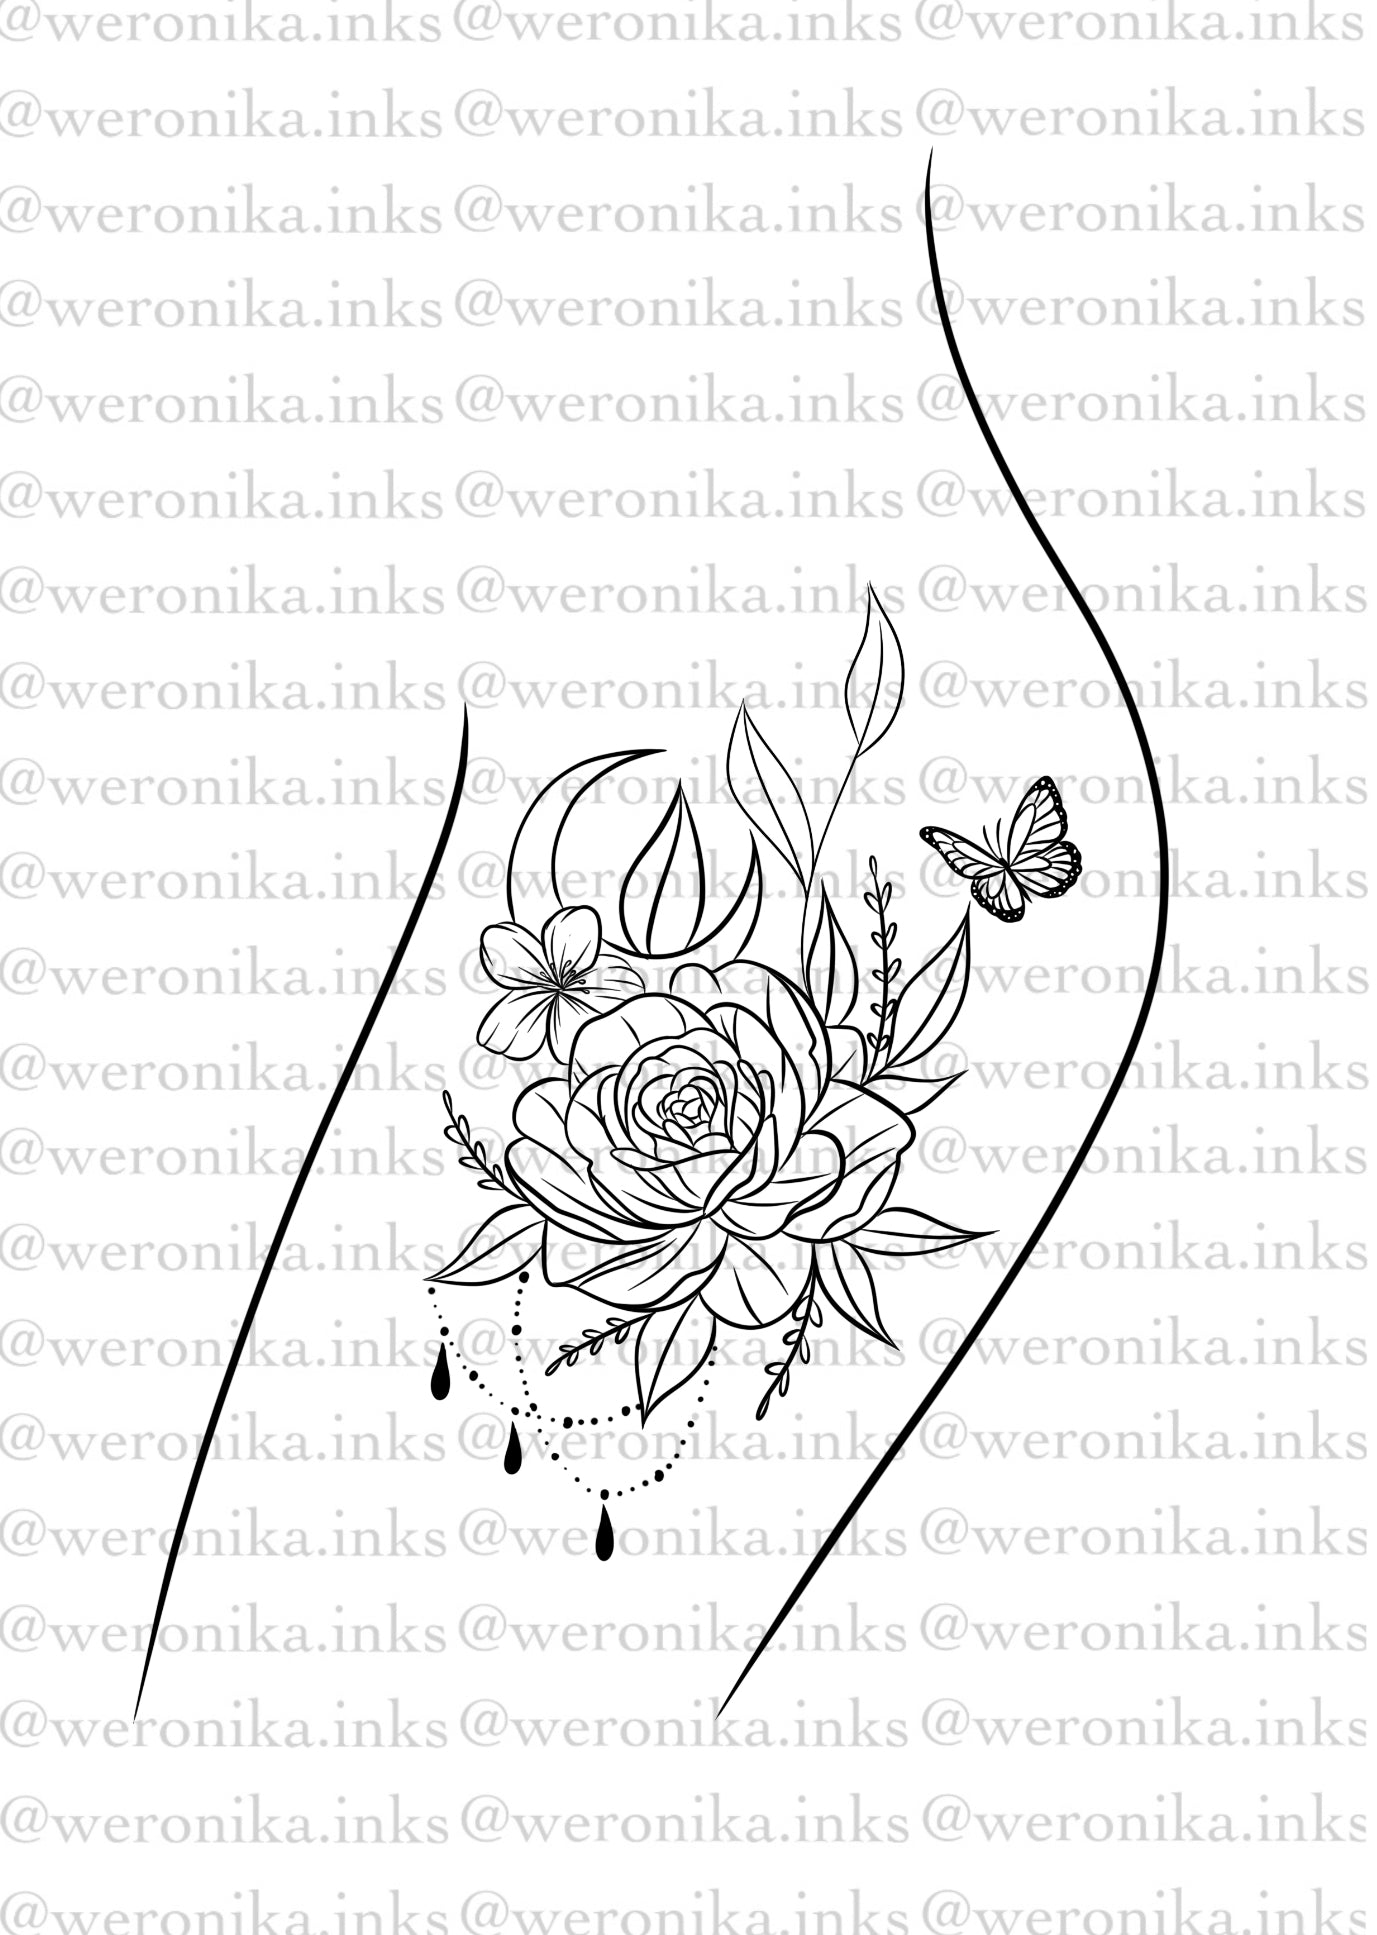 Floral & moon thigh tattoo – Weronika.inkss